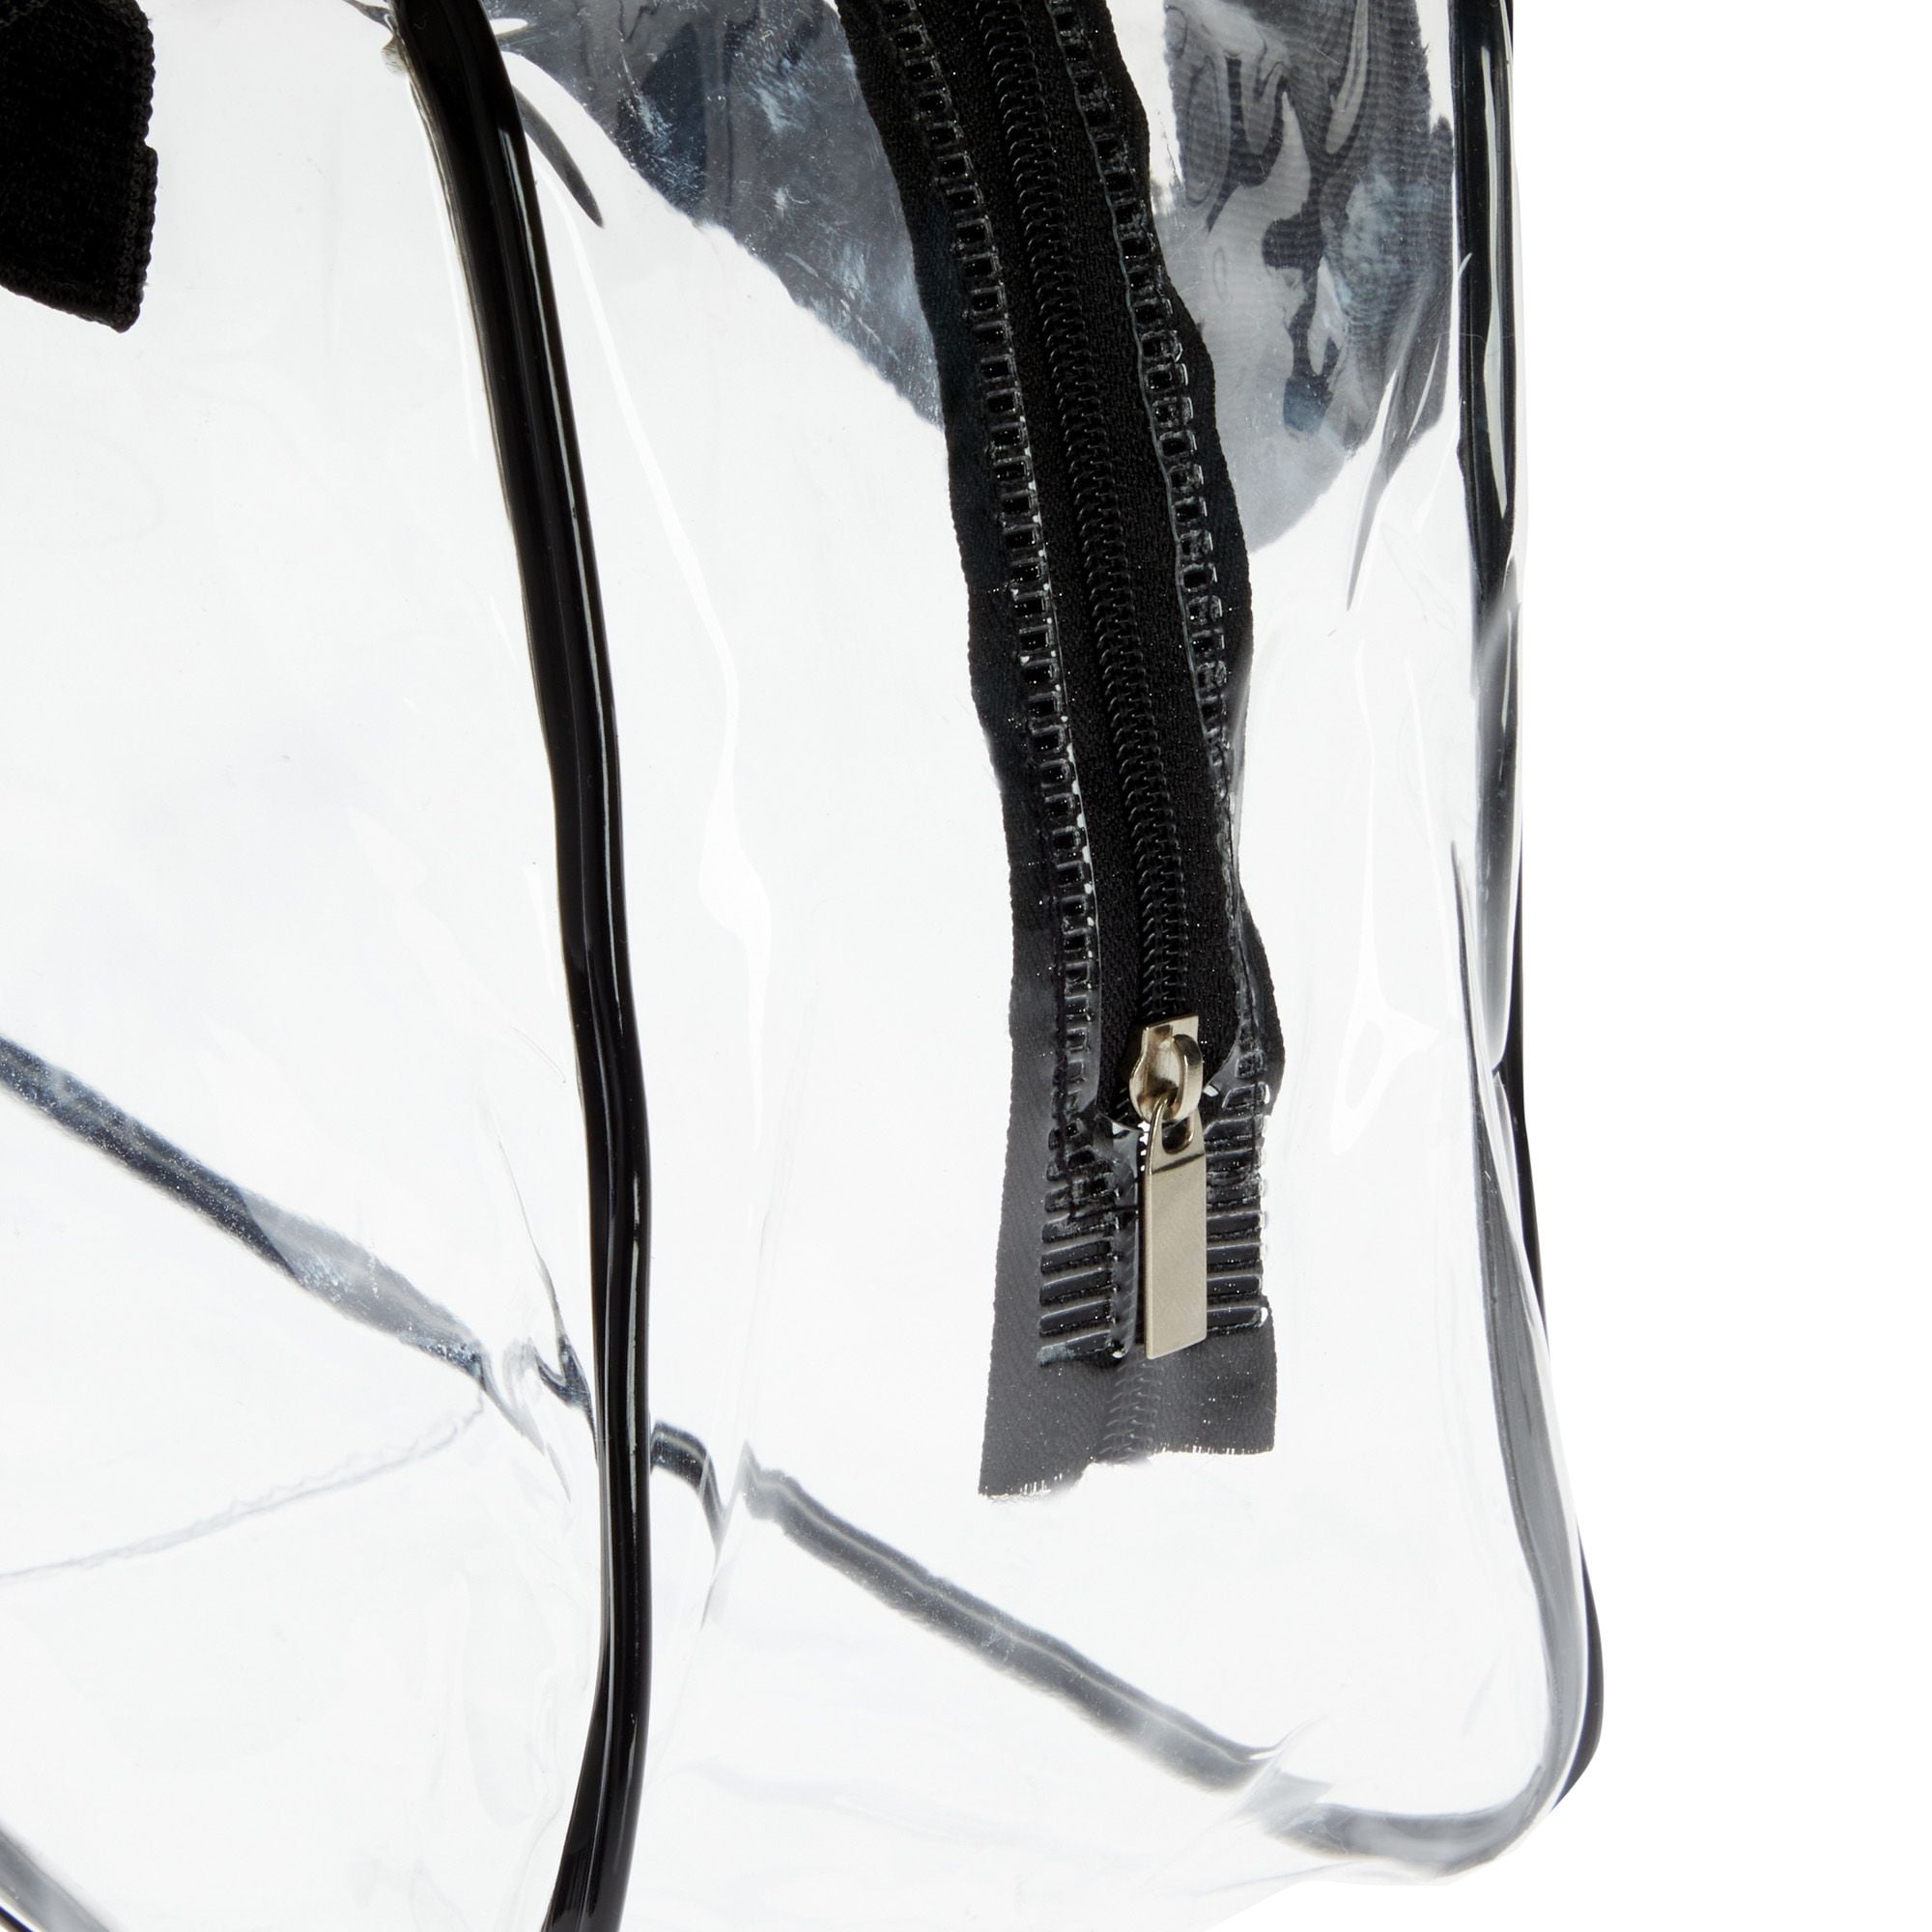 Clear Pvc Tote Bag w/Side Pocket & Zipper - Shopping, Gym